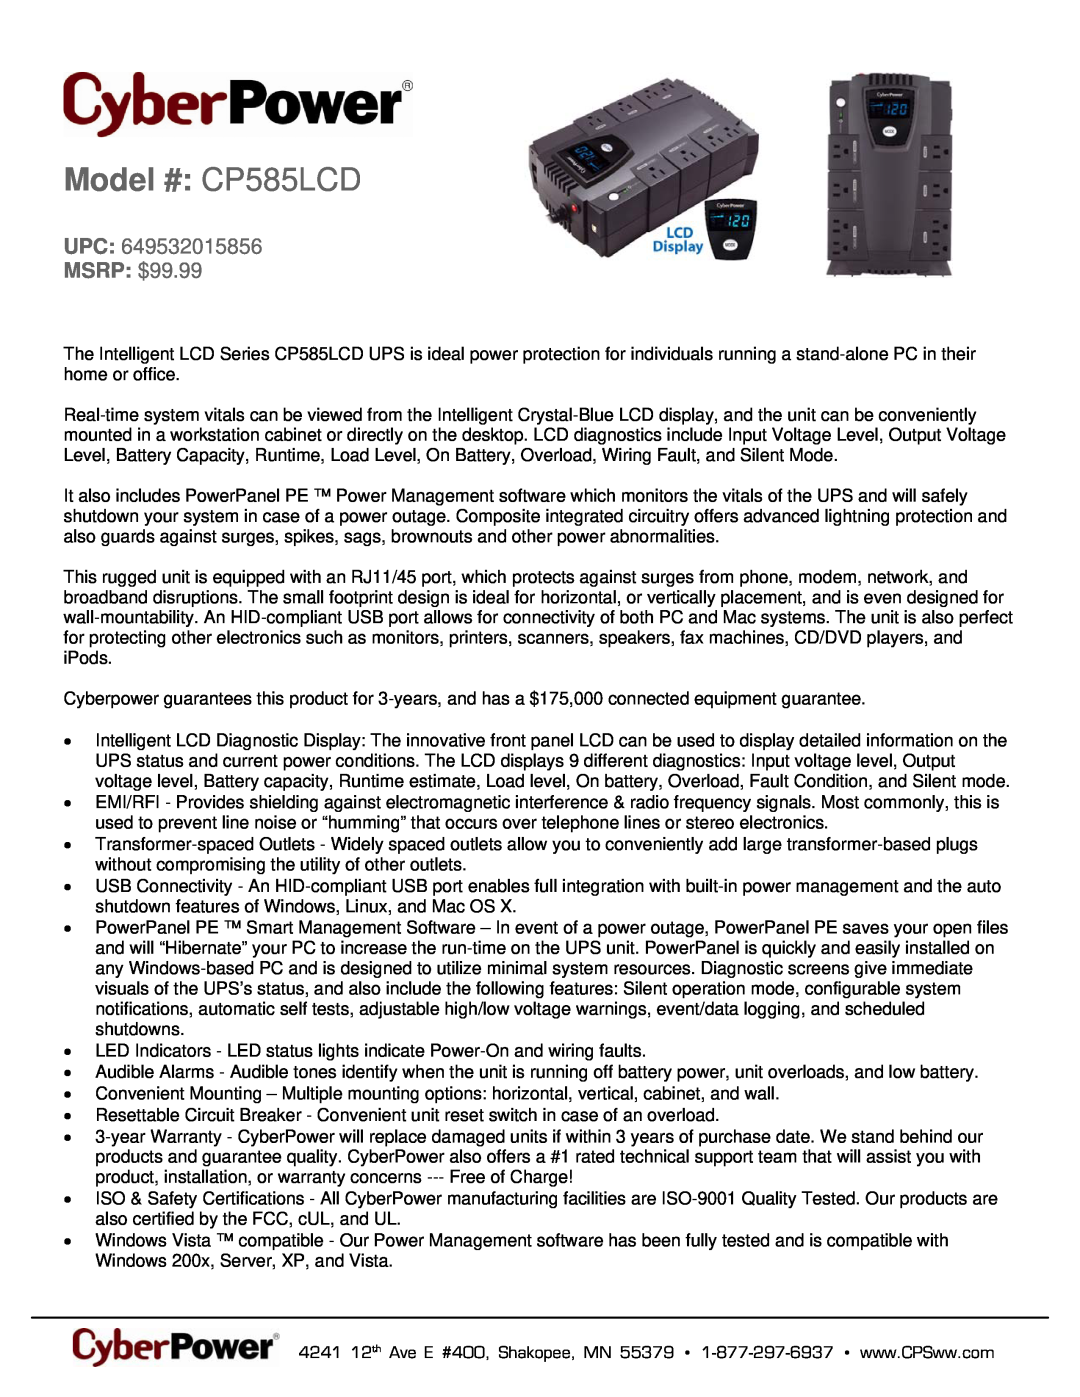 CyberPower Systems 649532015856 warranty Model # CP585LCD, MSRP $99.99 